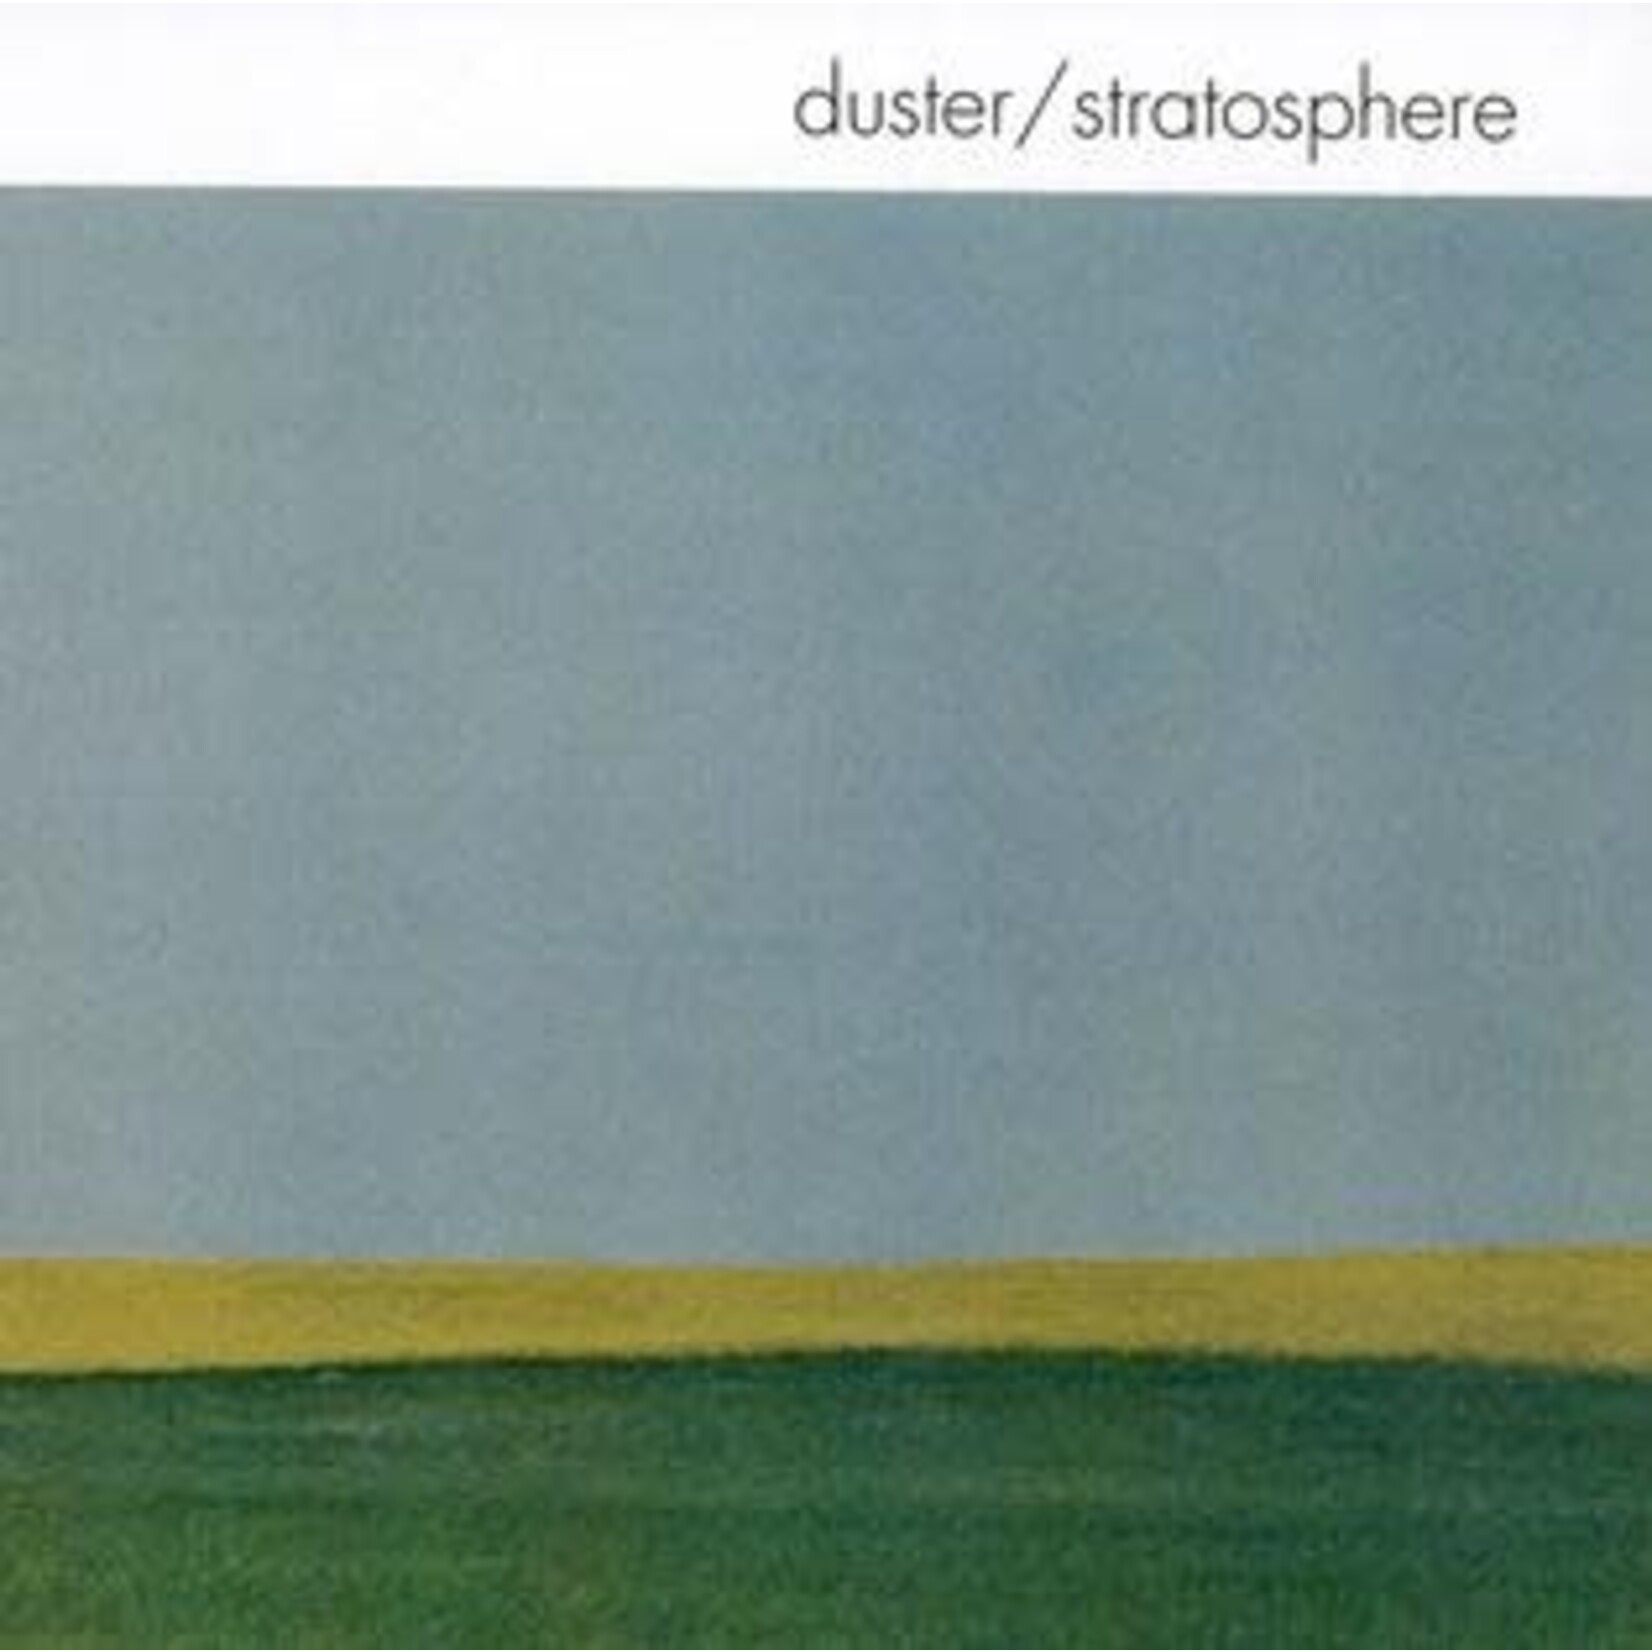 [New] Duster - Stratosphere (25th anniversary edition, 180g, constellations splatter vinyl)